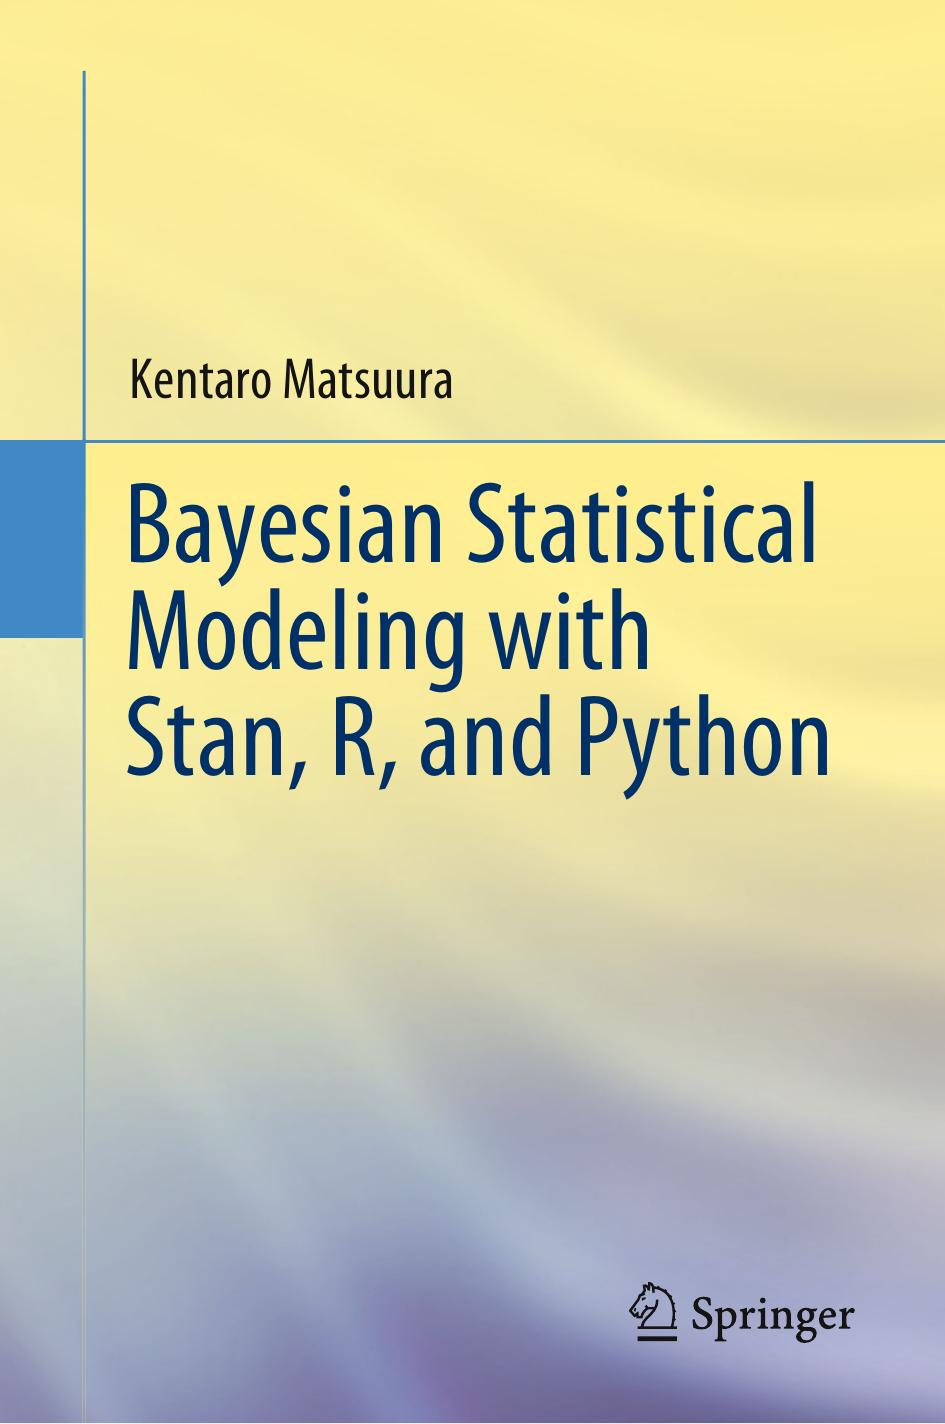 Bayesian Statistical Modeling with Stan, R, and Python by Kentaro Matsuura